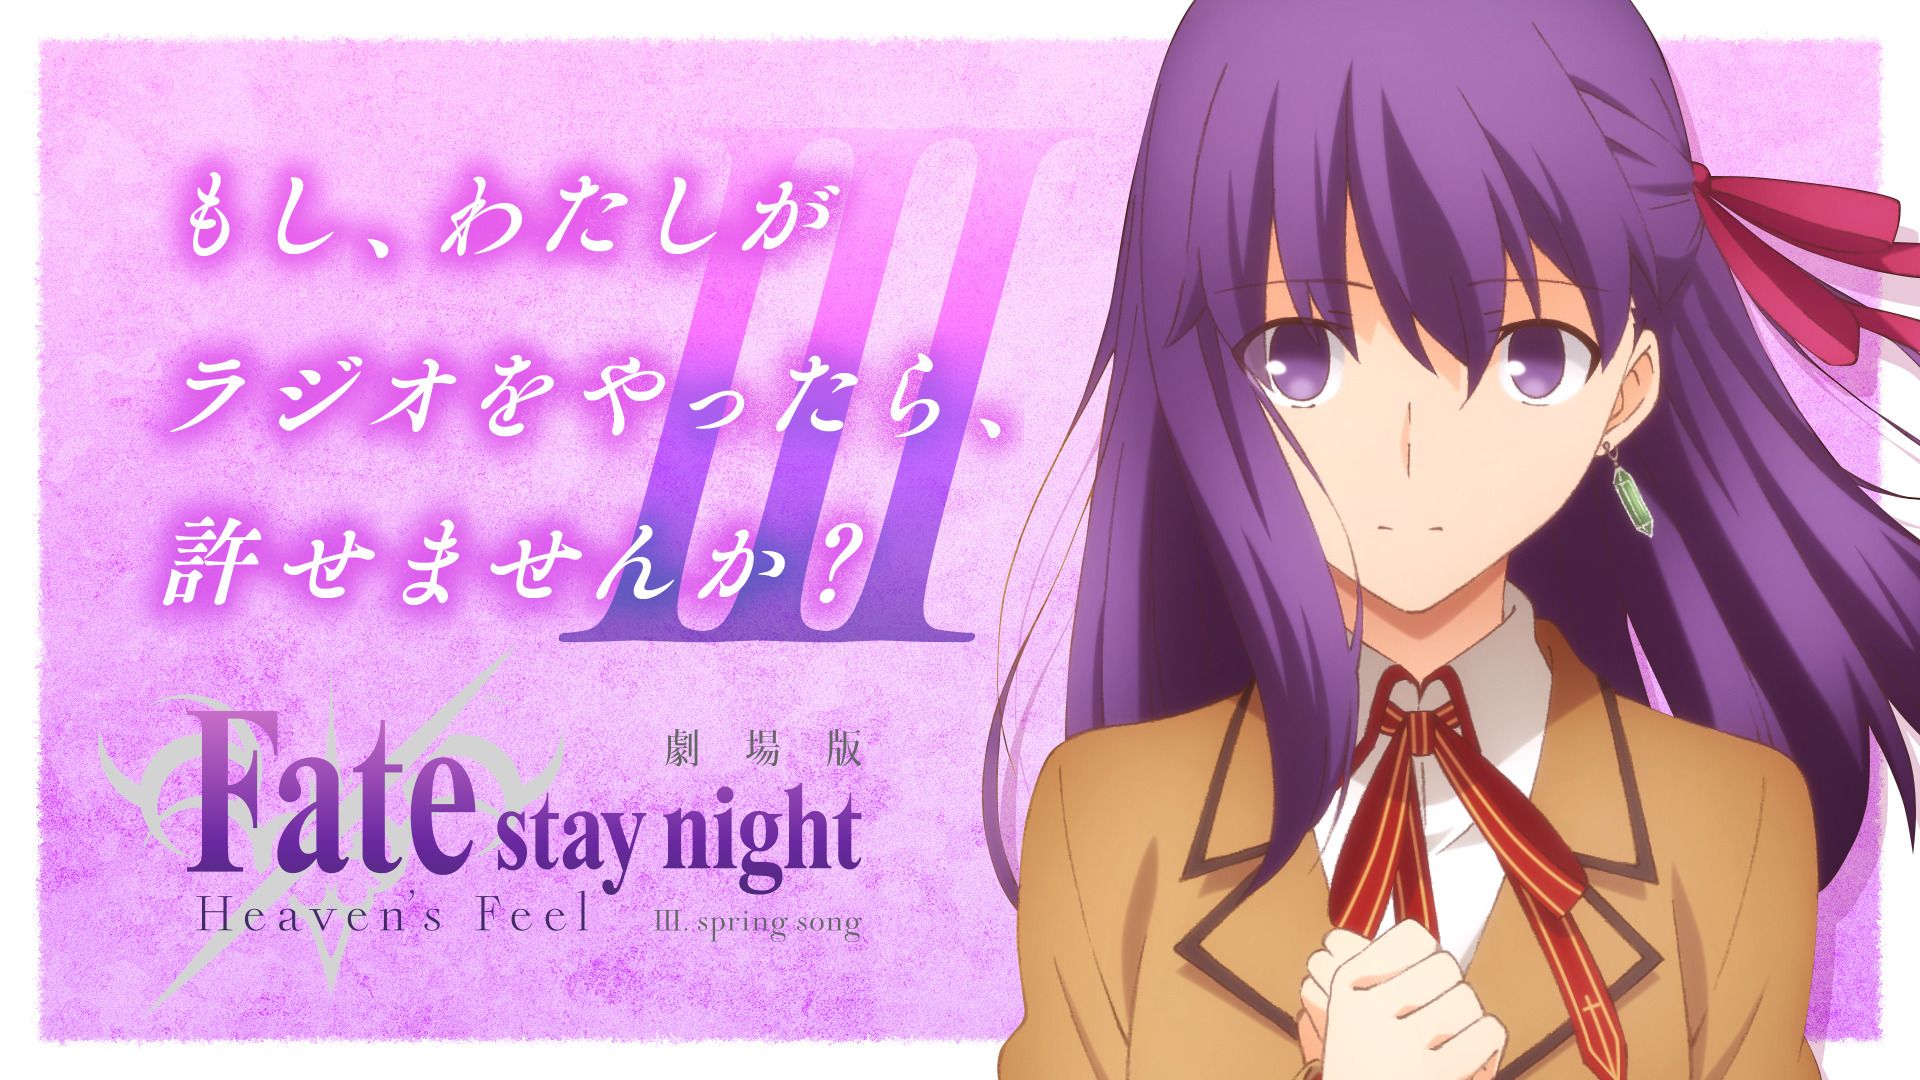 Ufotable Kobayashi Yui Fate Stay Night Fate Stay Night Heaven's Feel Matou Sakura Seifuku Wallpaper